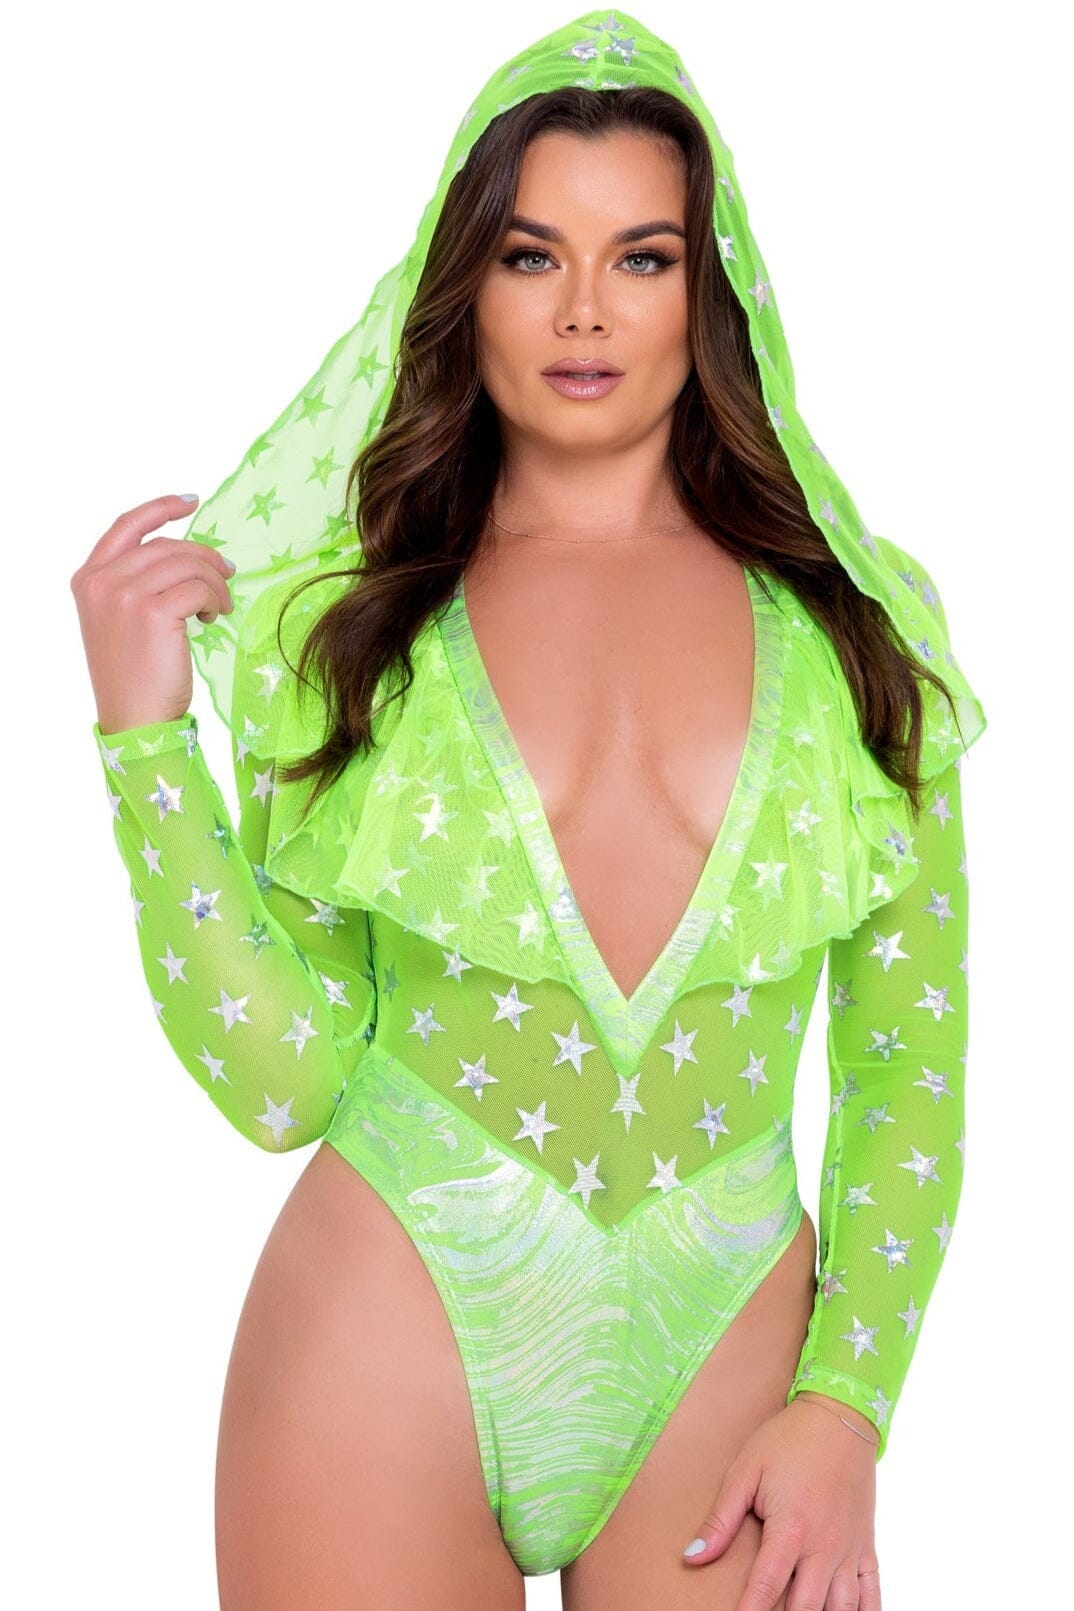 Star Child Green Mesh Hooded Romper-Dancewear Rompers-Roma Dancewear-Neon-L-SEXYSHOES.COM